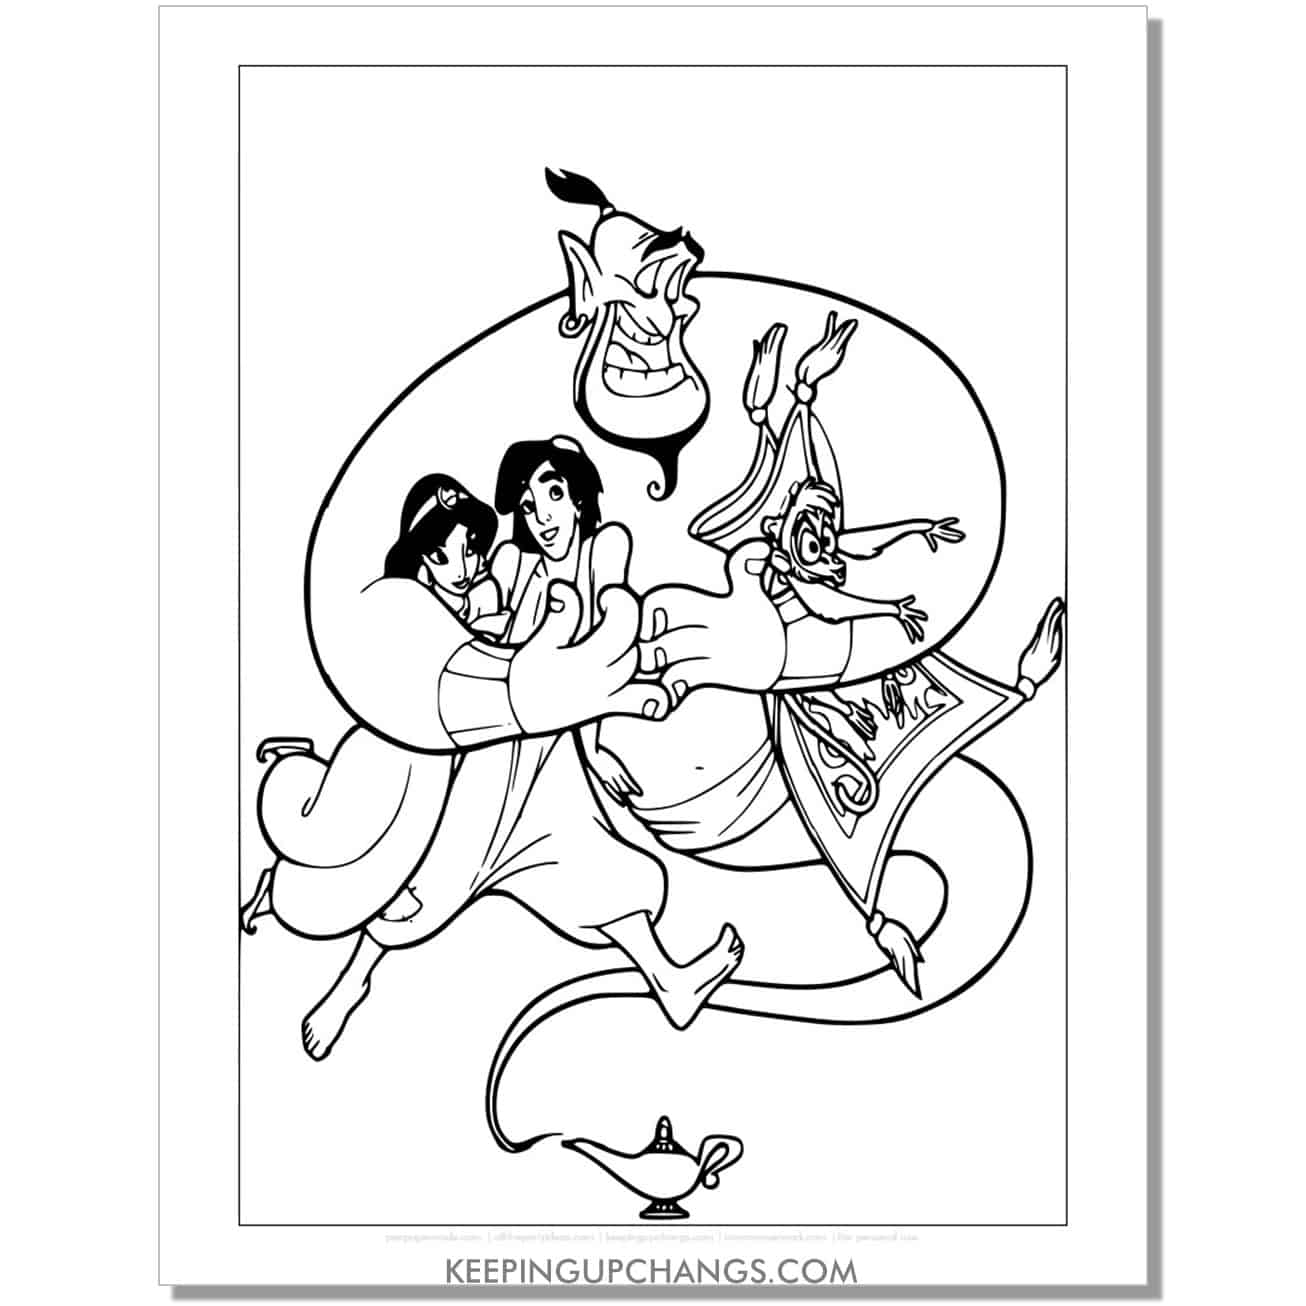 genie hugging jasmine, abu, carpet, and aladdin coloring page, sheet.